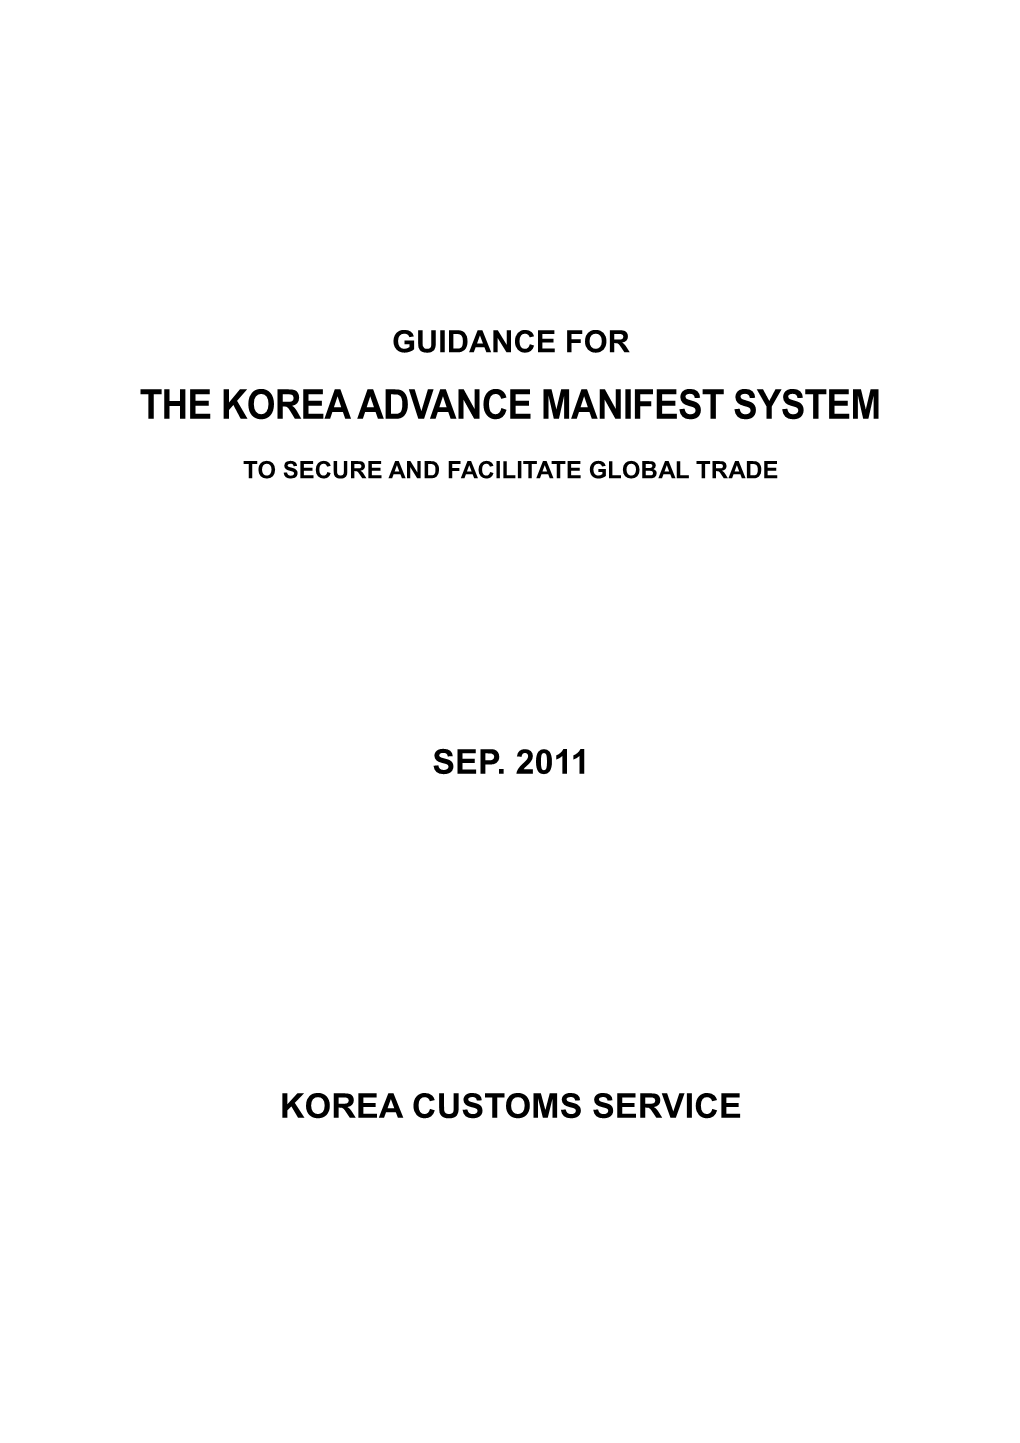 The Koreaadvance Manifest System